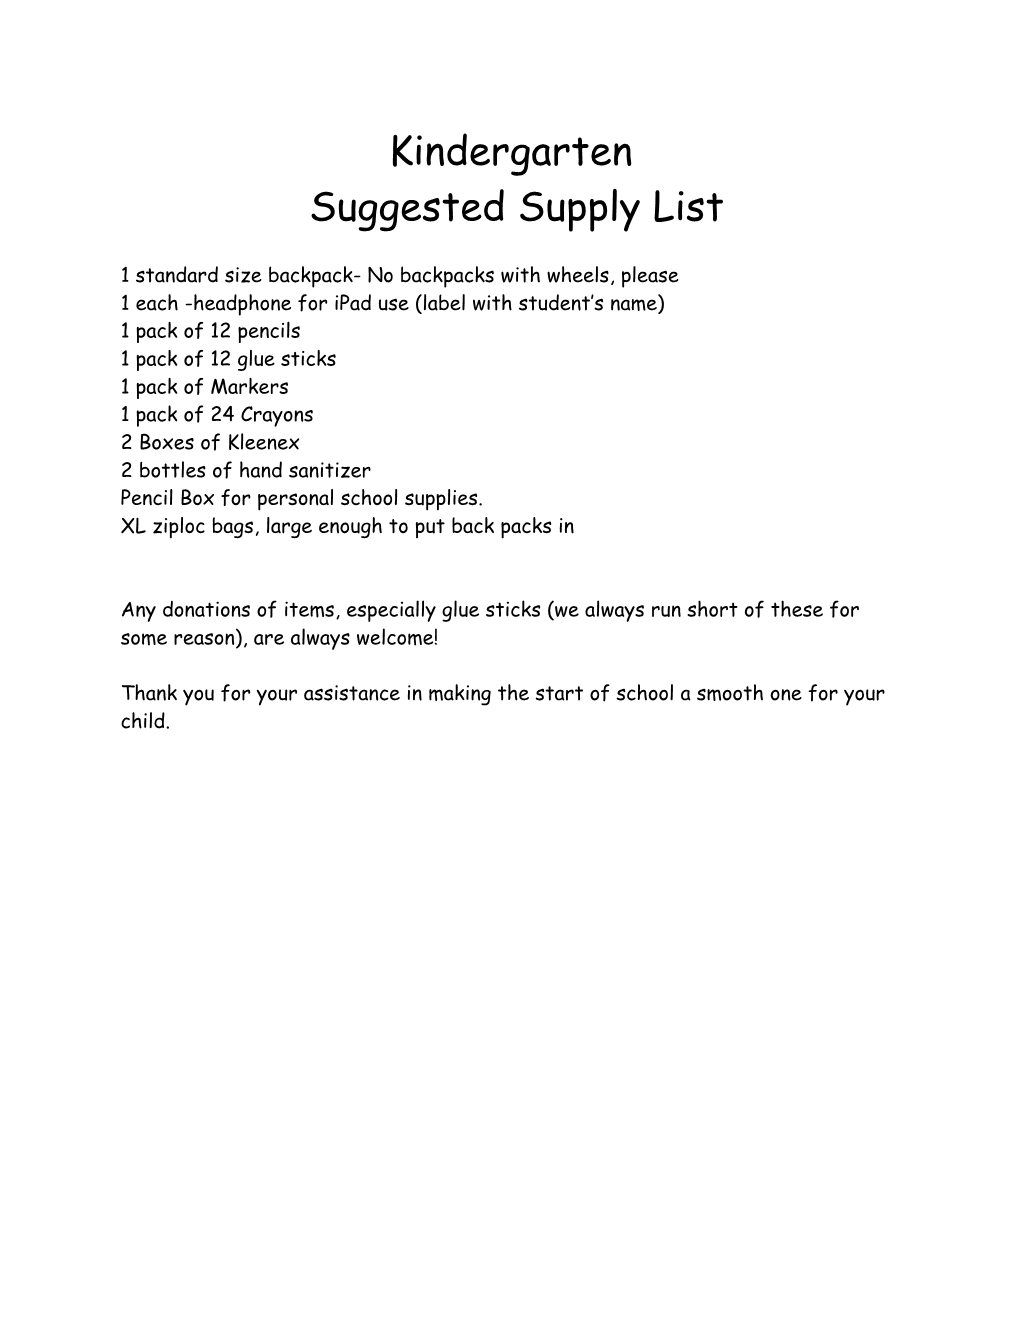 Kindergarten Suggested Supply List